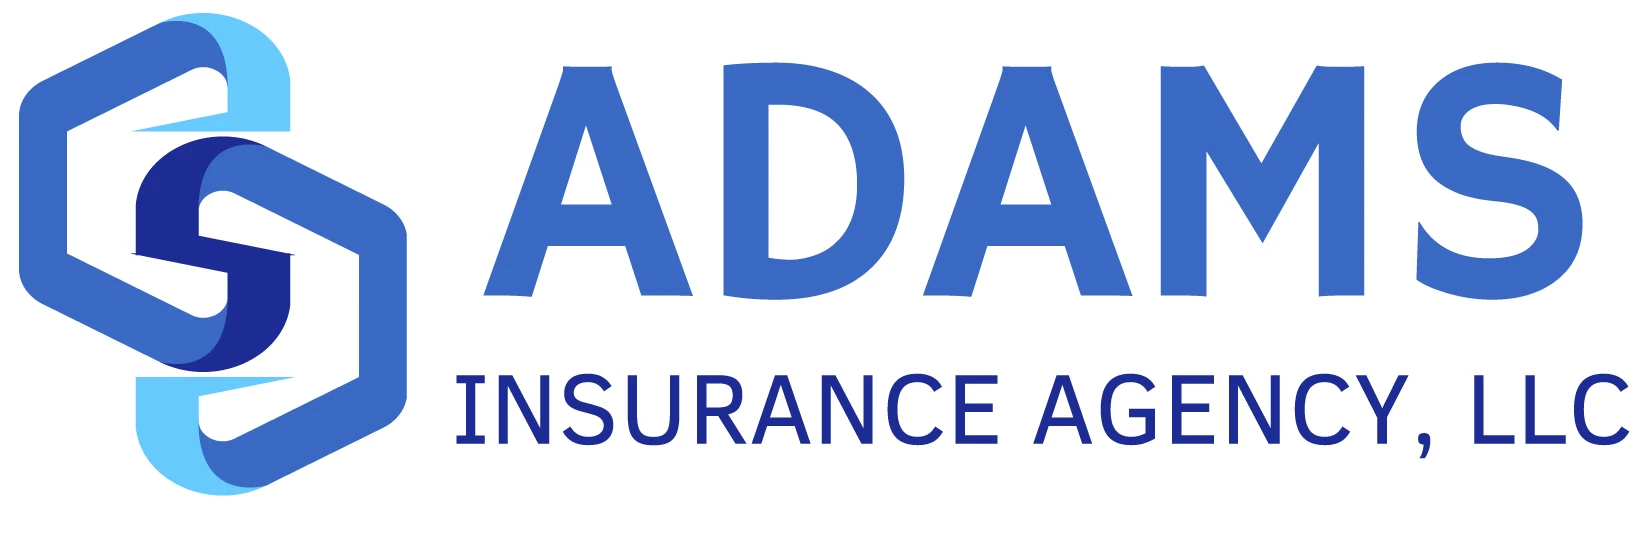 Steven Adams Insurance Agency LLC logo